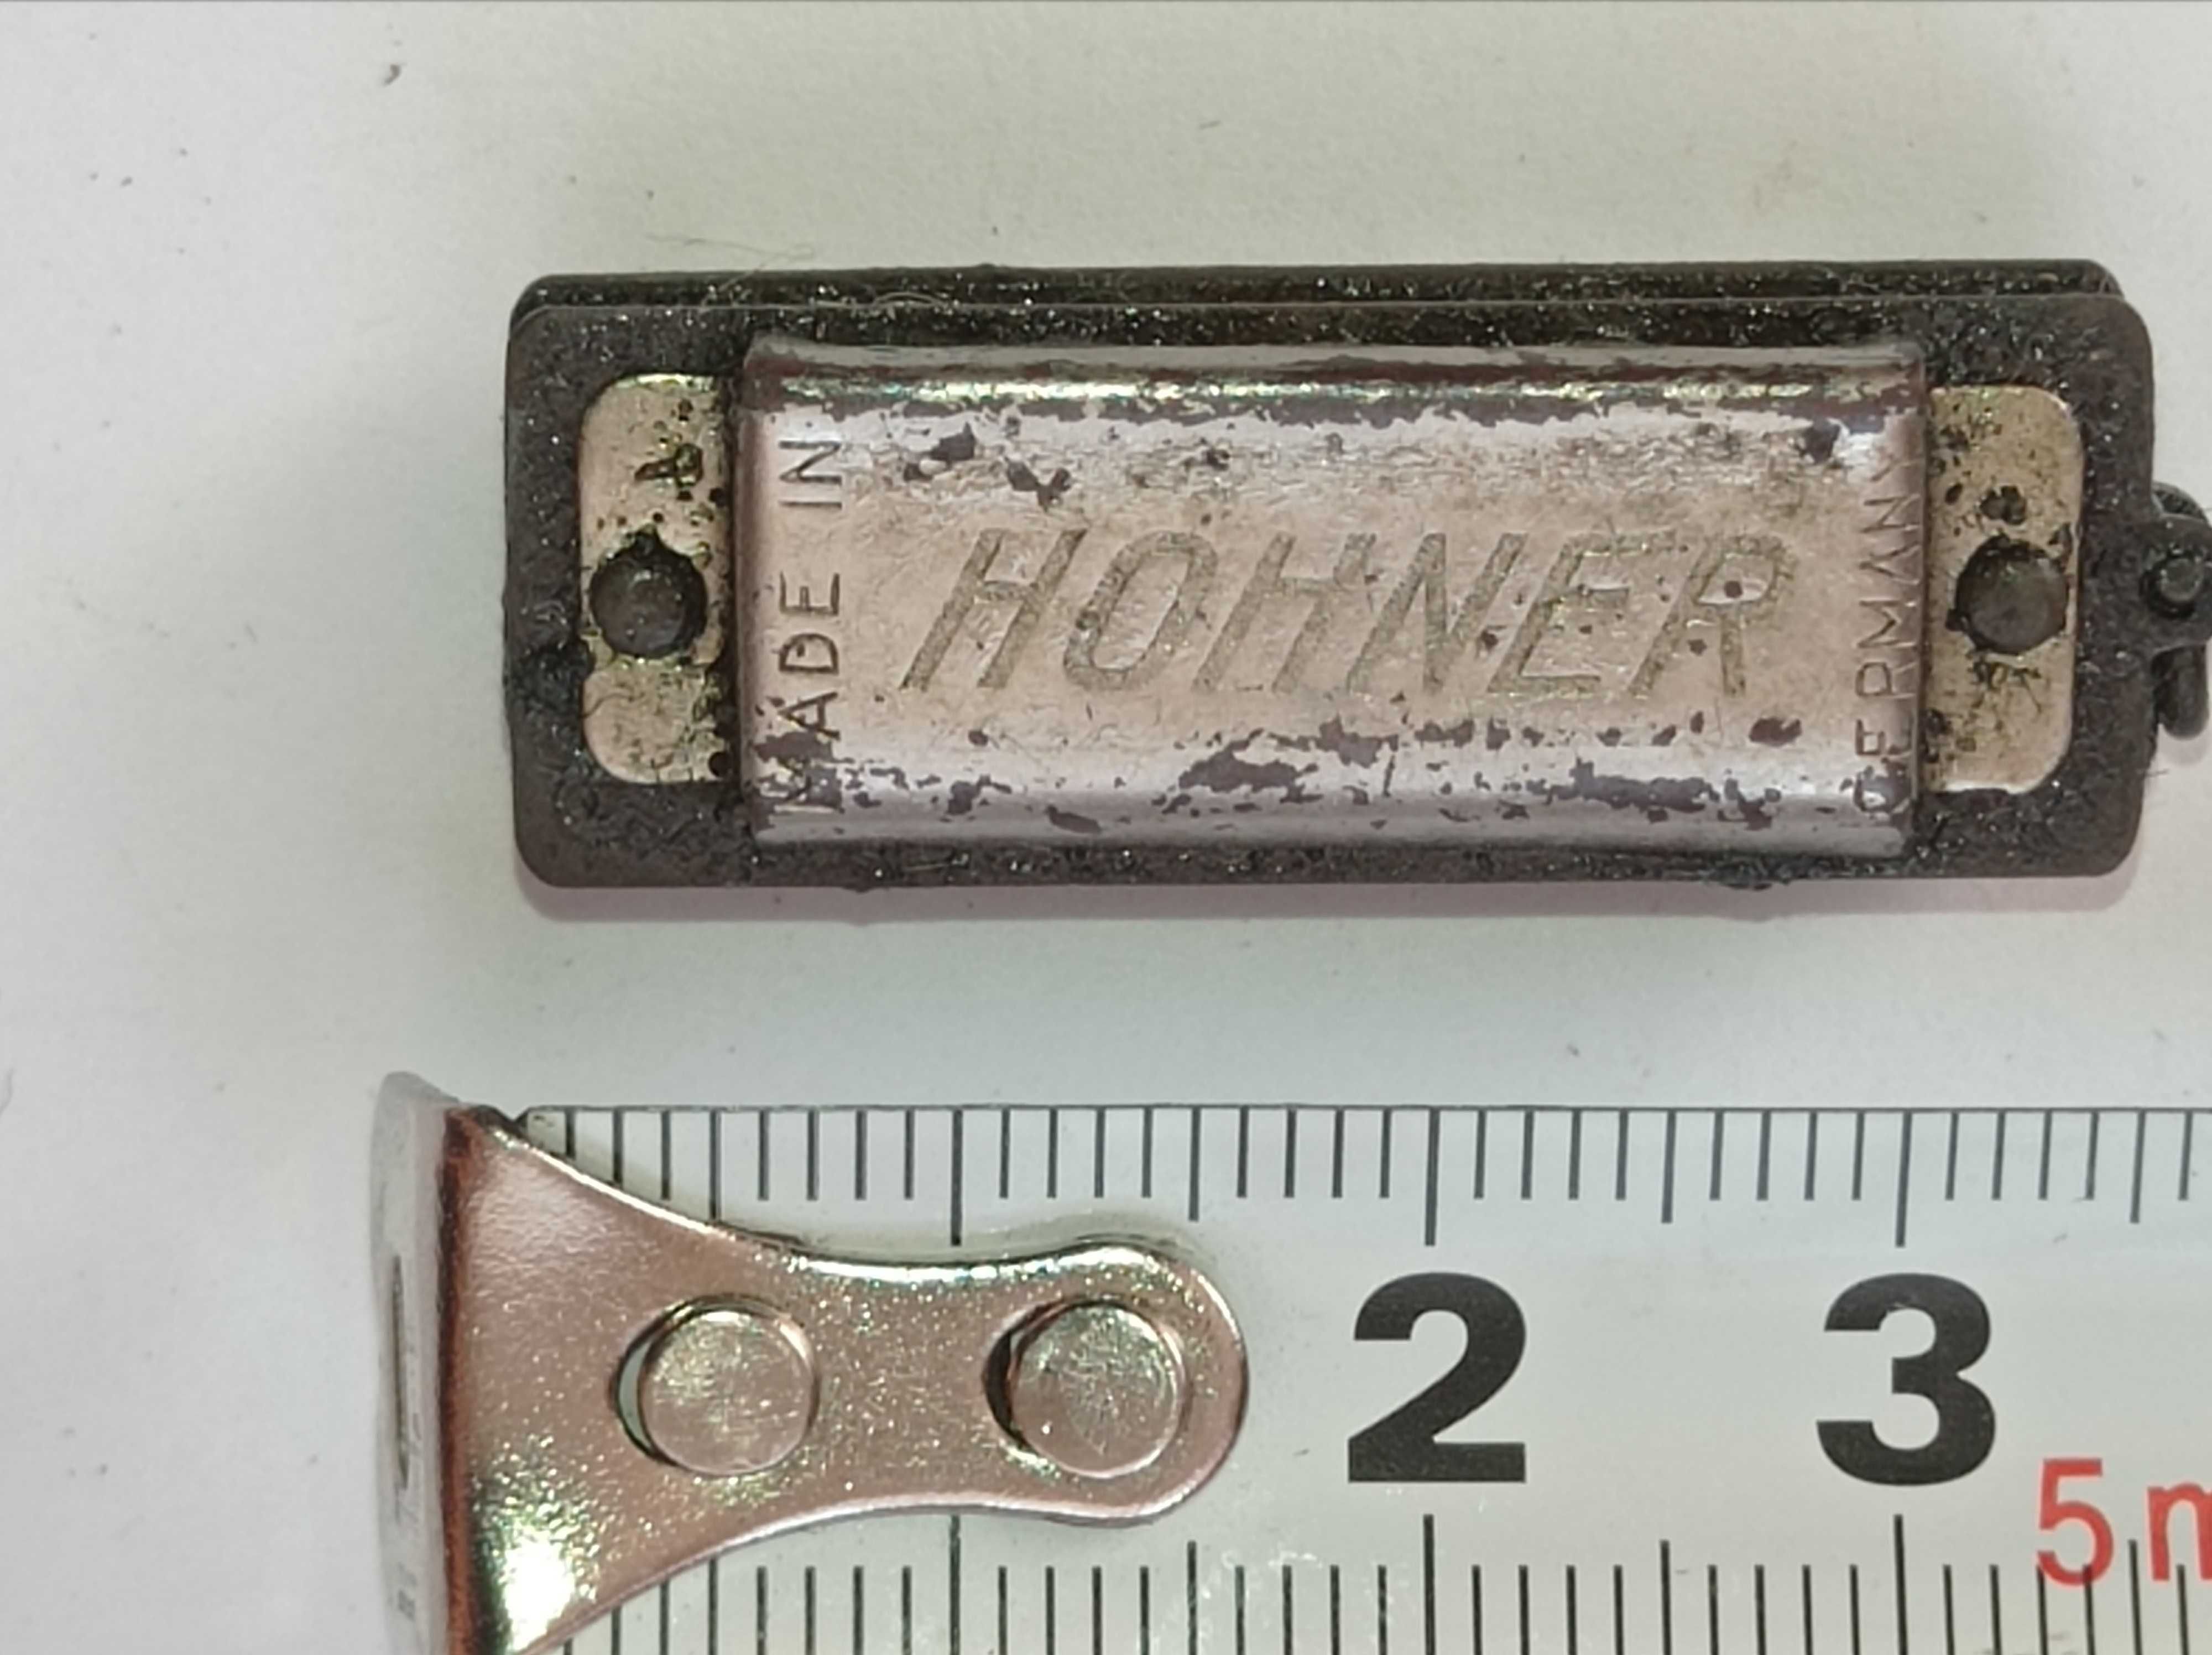 Stare mikro organki Hohner - Francis Dorny - Made in Germany